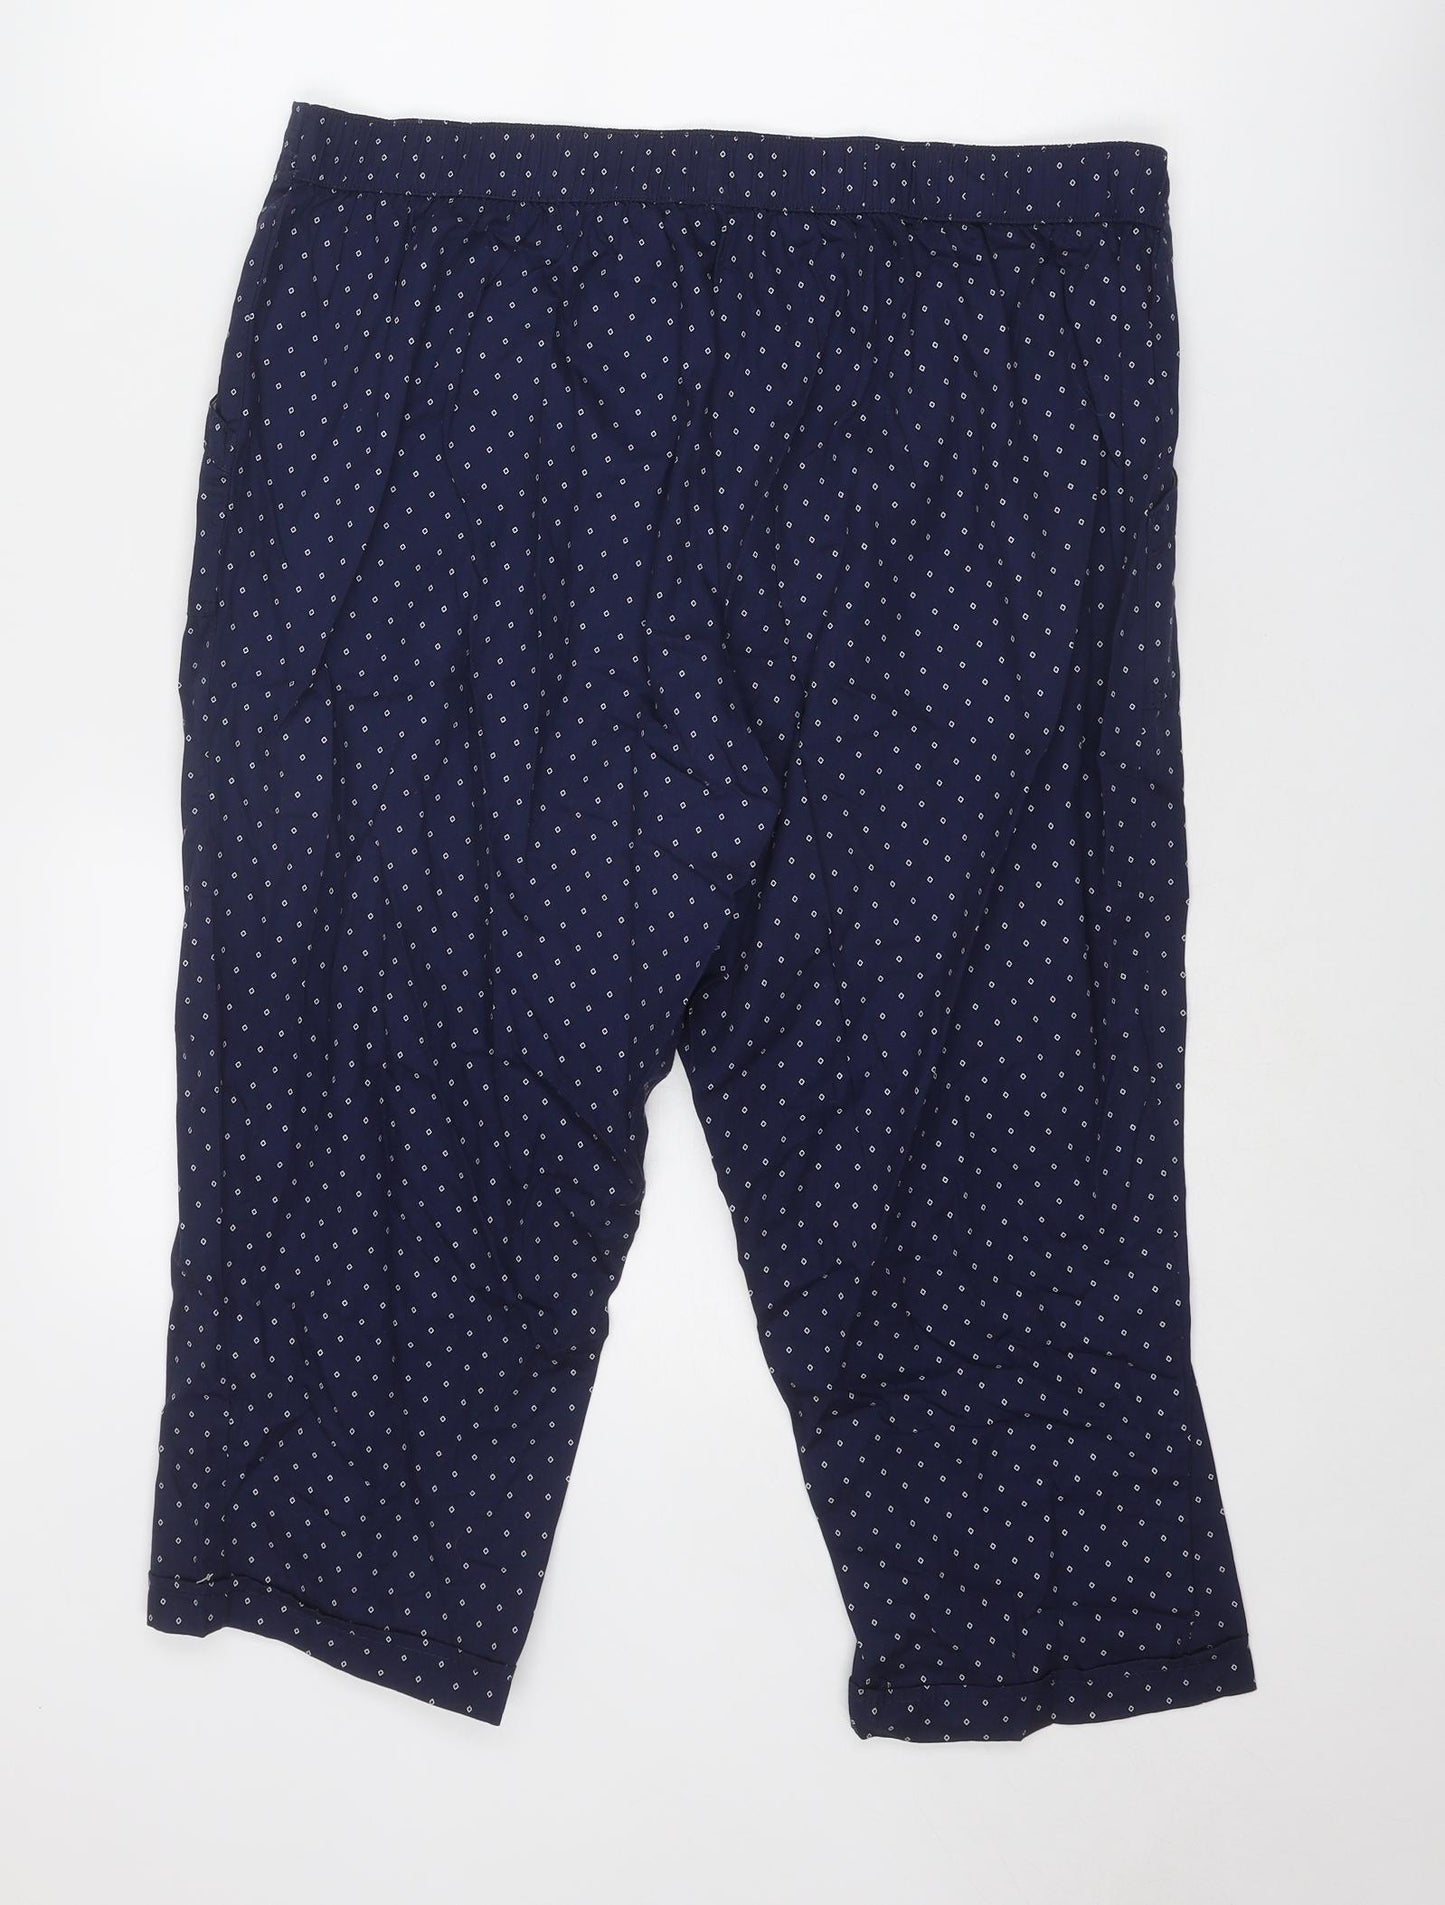 Bonmarché Womens Blue Polka Dot Cotton Capri Trousers Size 18 L21 in Regular